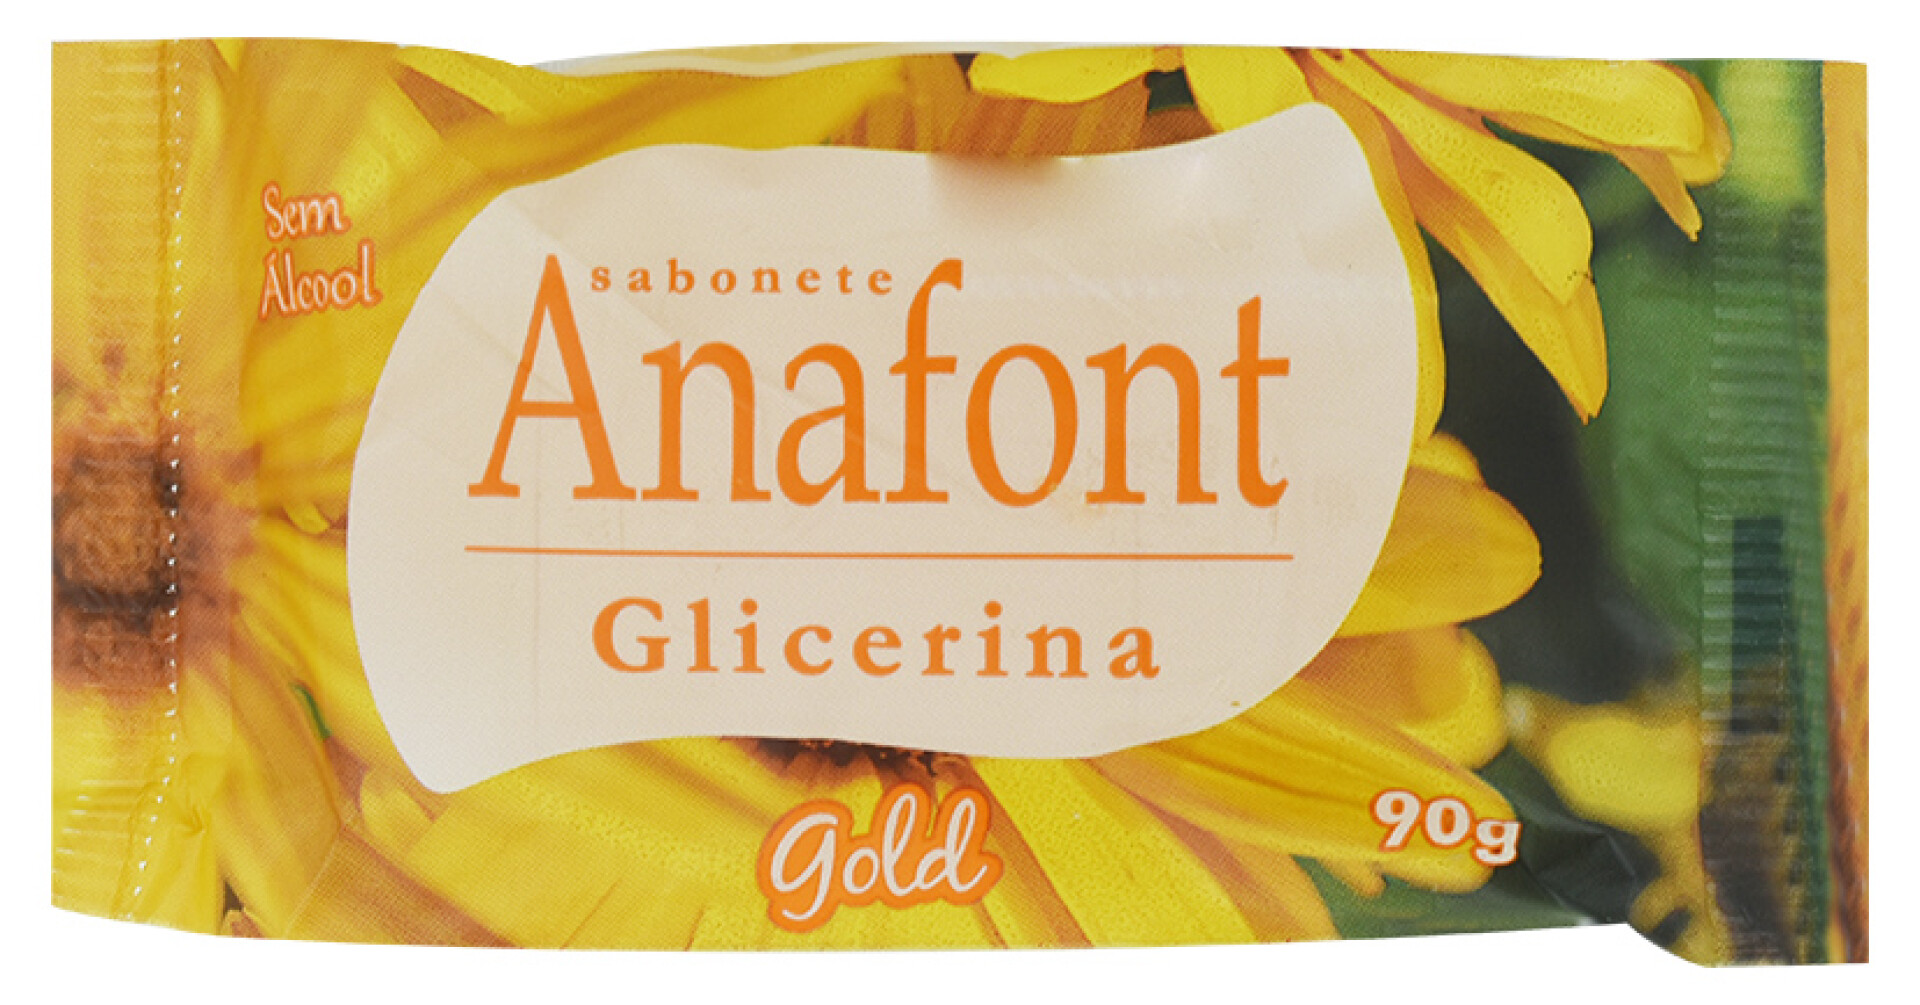 JABON GLICERINA GOLD ANAFONT 90 GR 